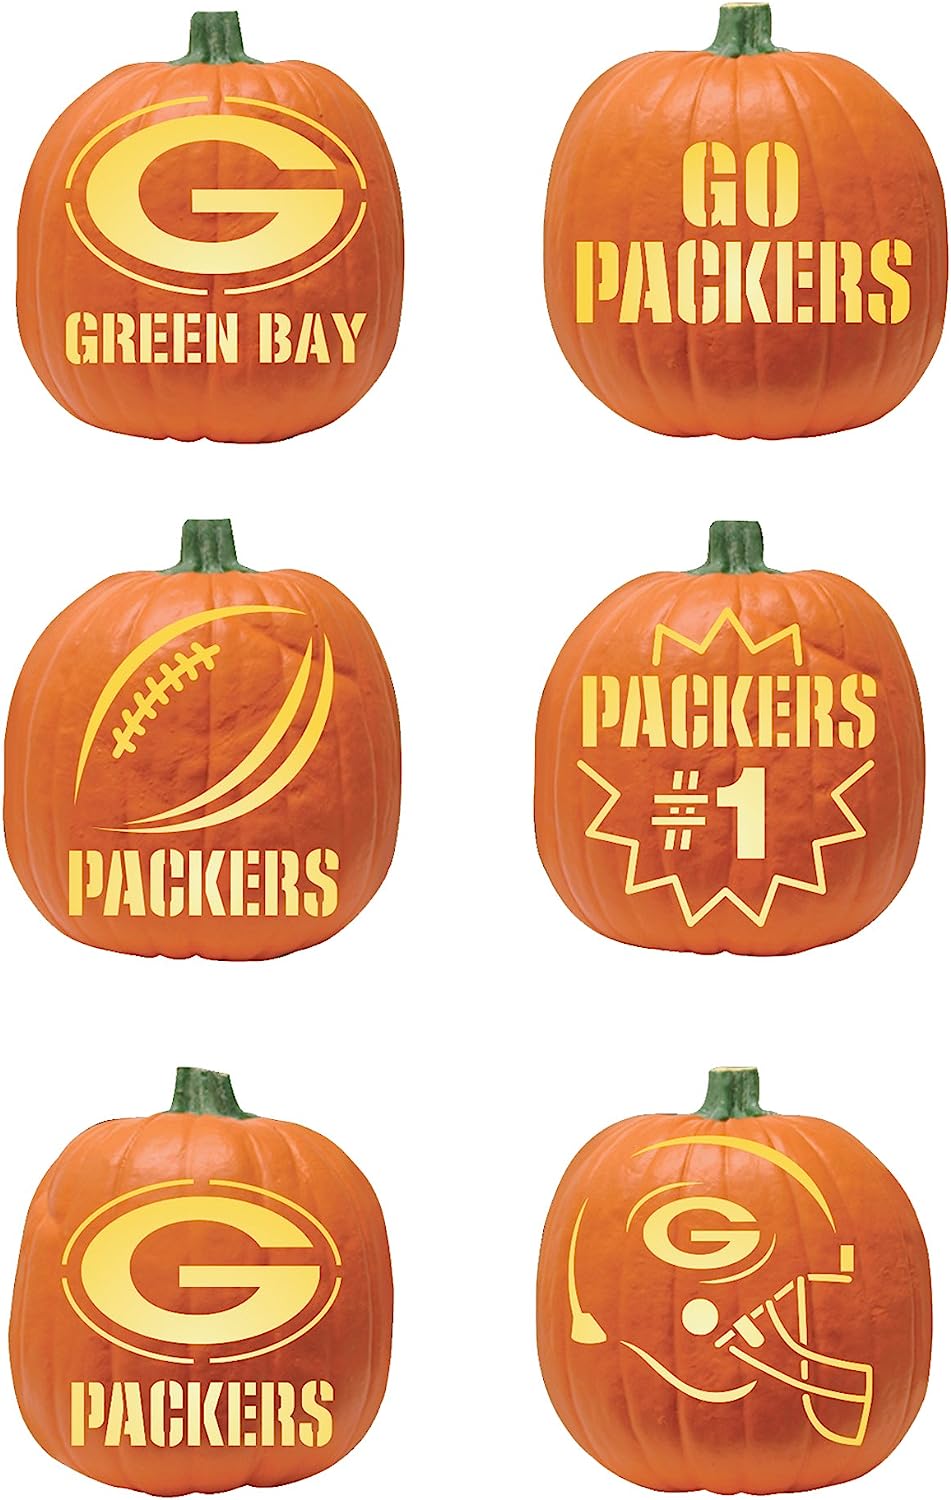 Green Bay Packers Halloween Pumpkin Carving Kit